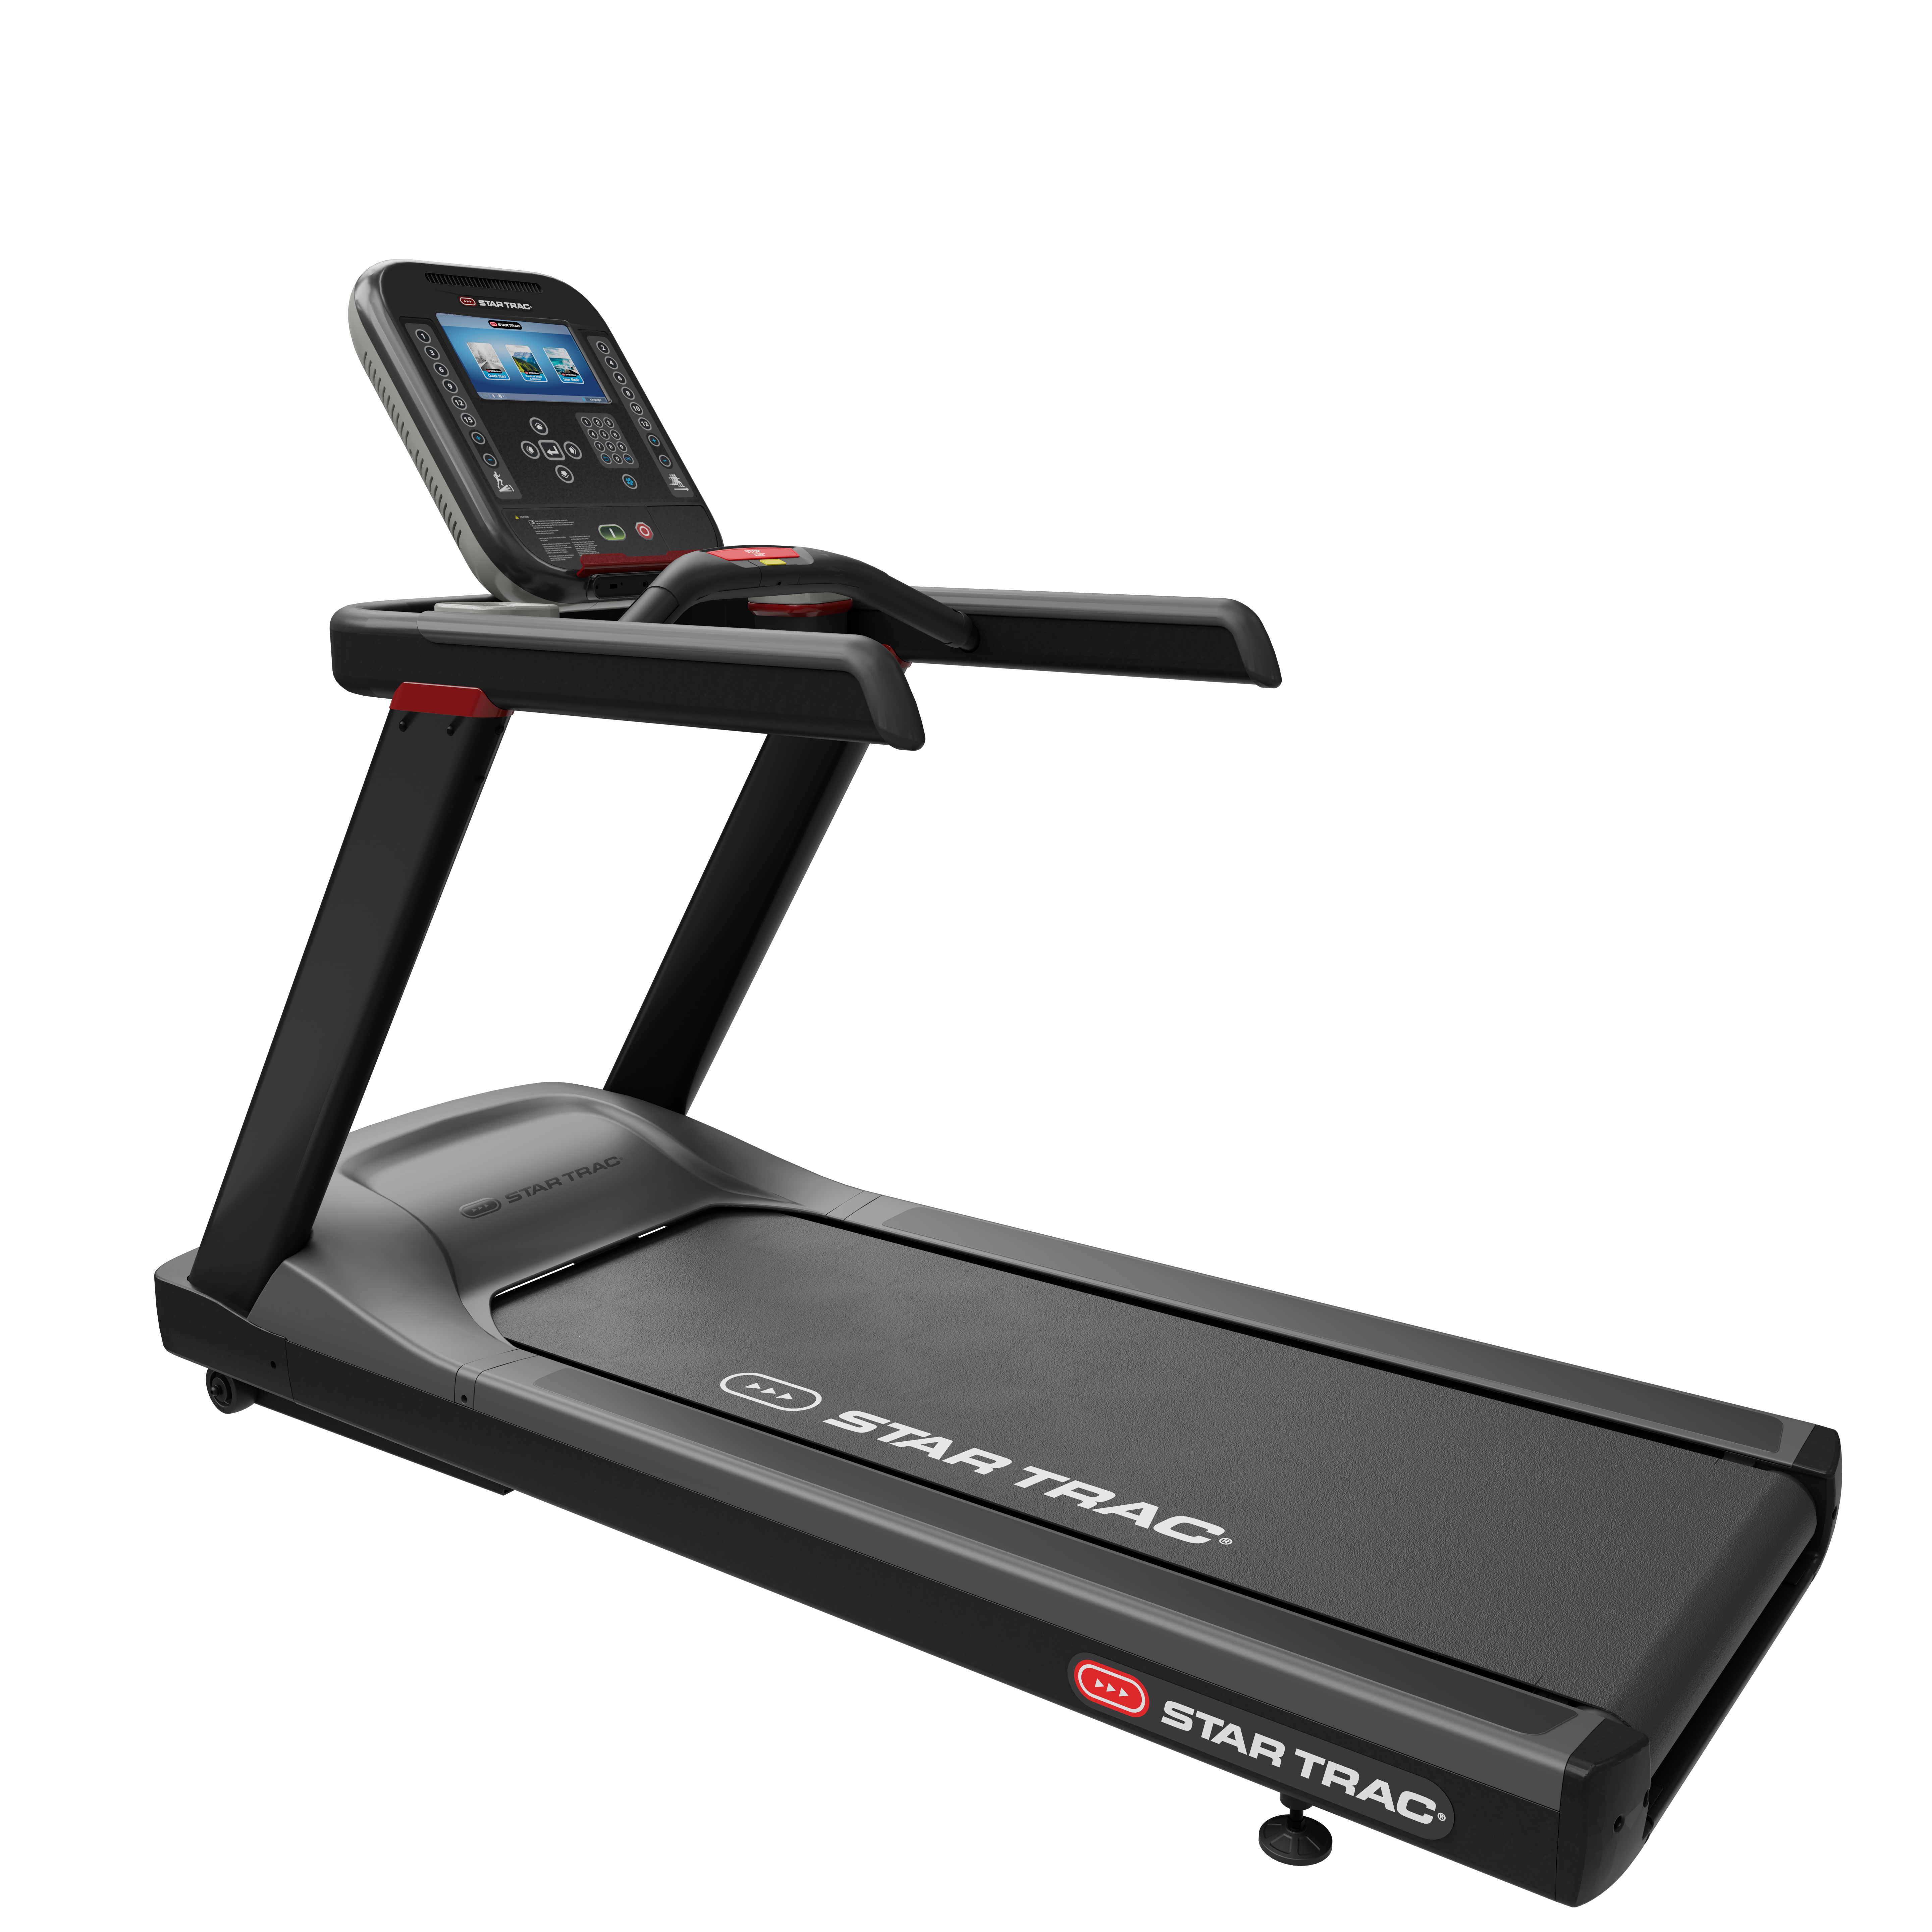 Star Trac 4 Series Treadmill Product Image